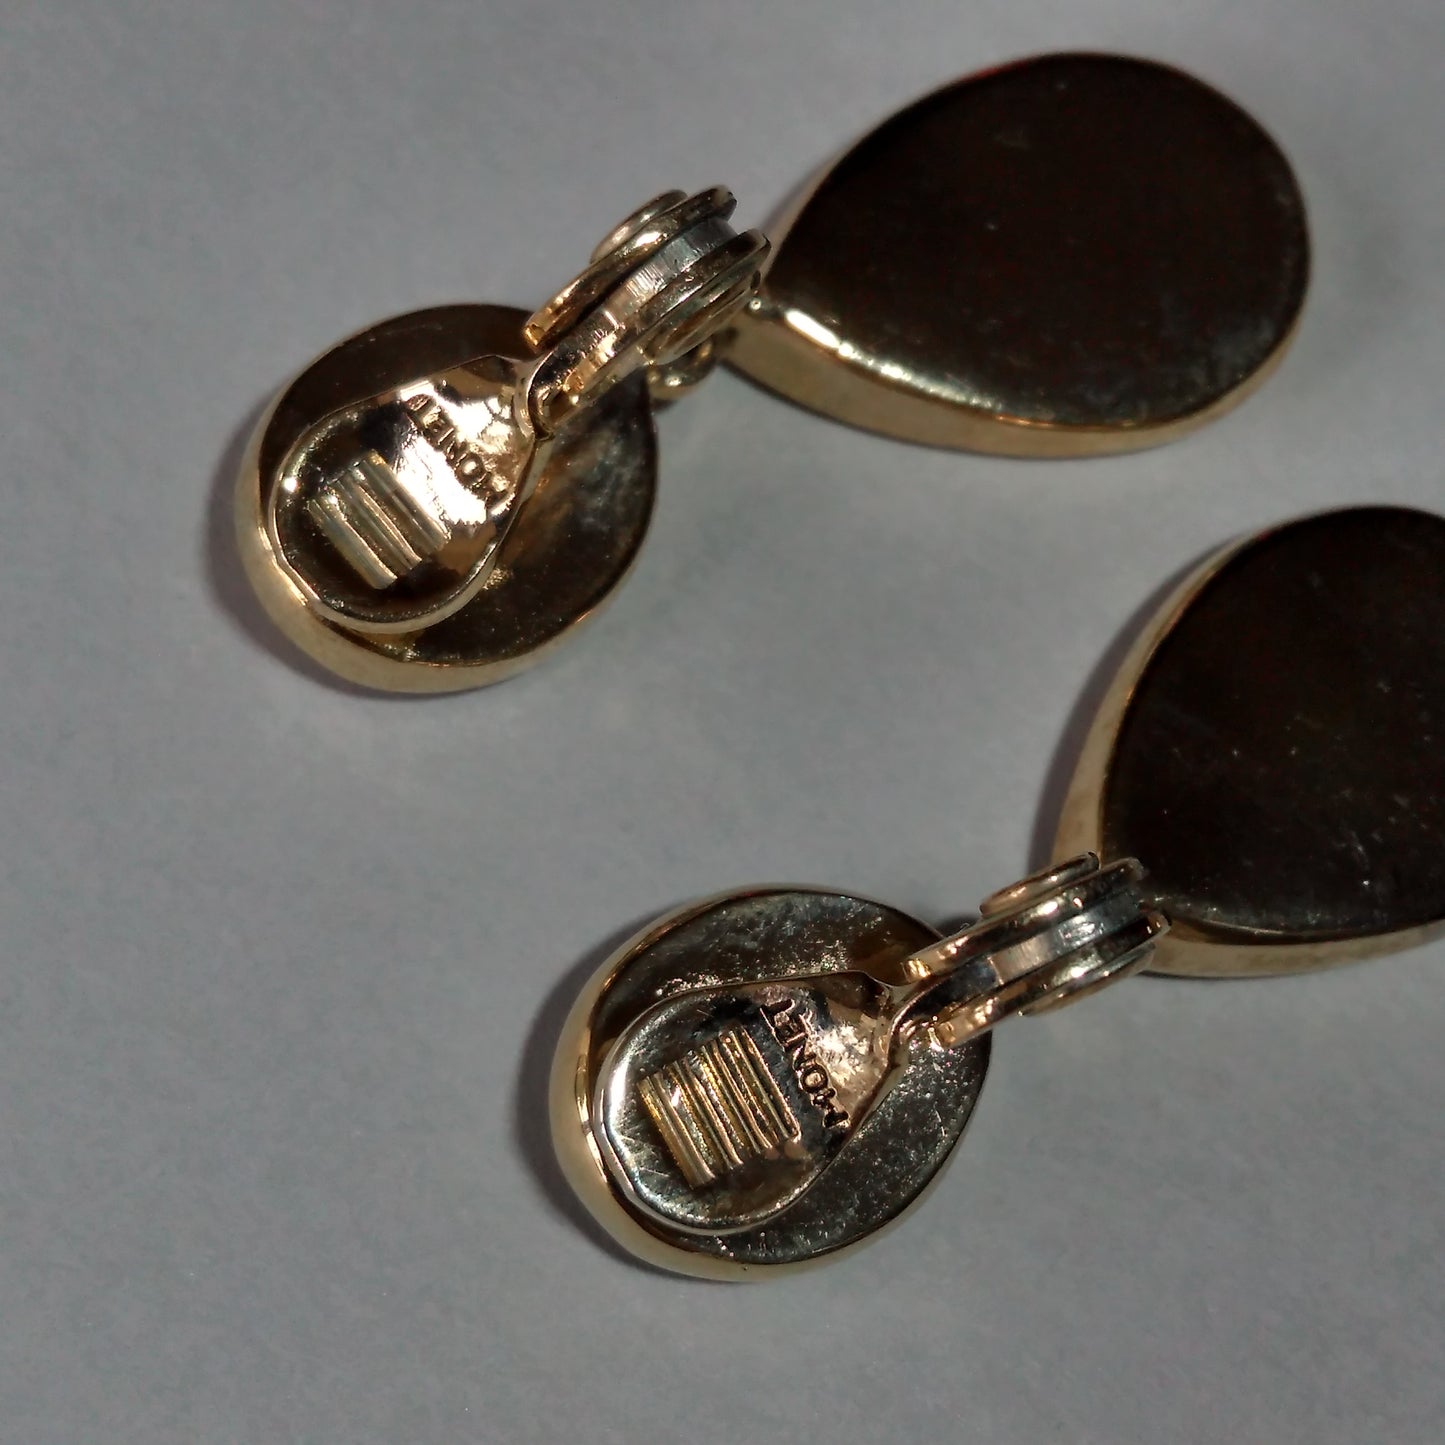 1970s Abalone Earrings